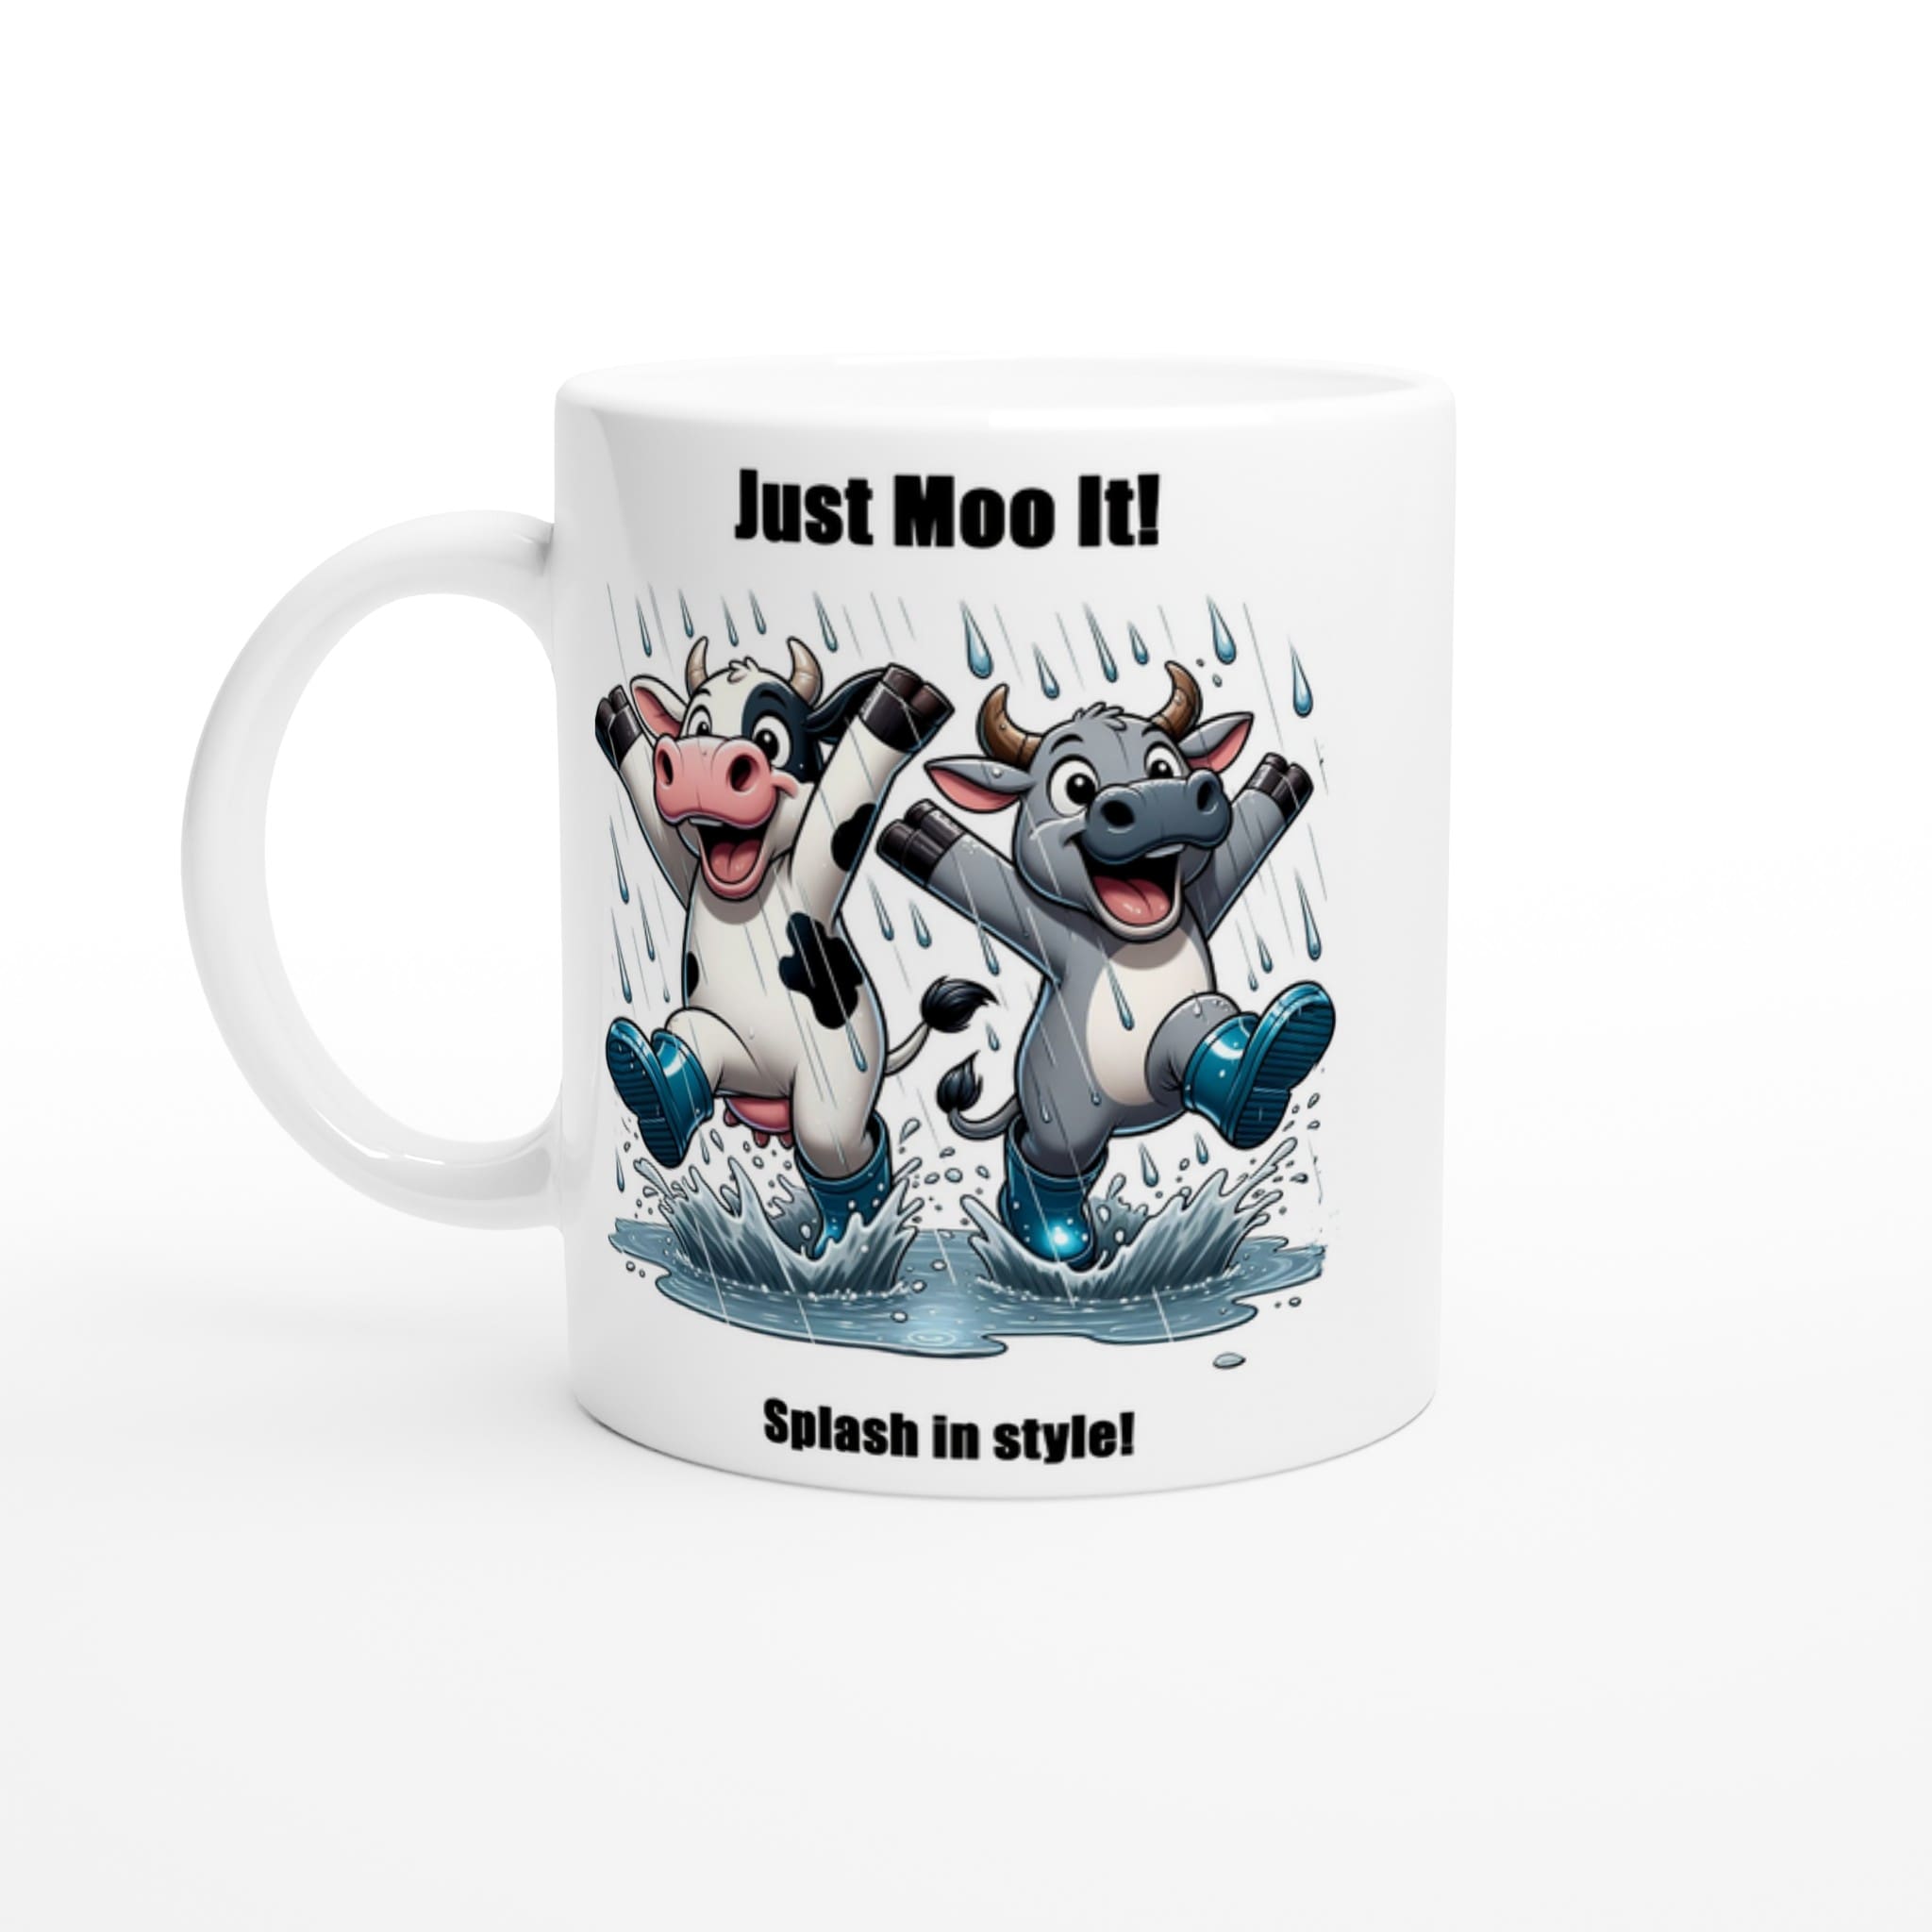 Just Moo it – White 11oz Ceramic Mug